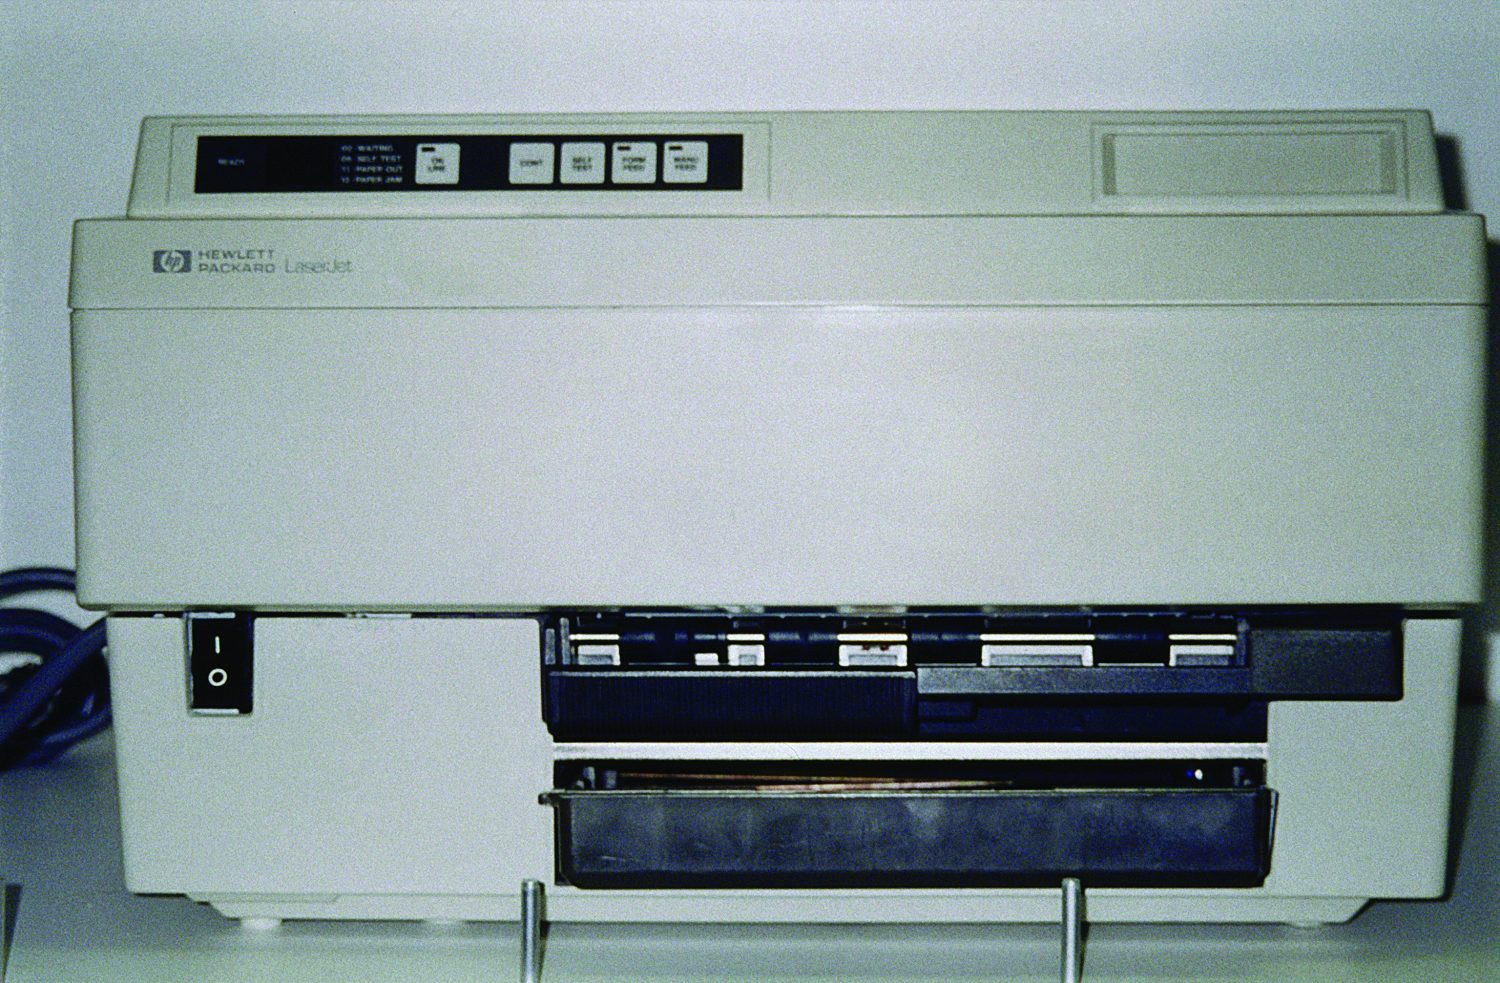 Photo of the HP 2686 LaserJet printer.